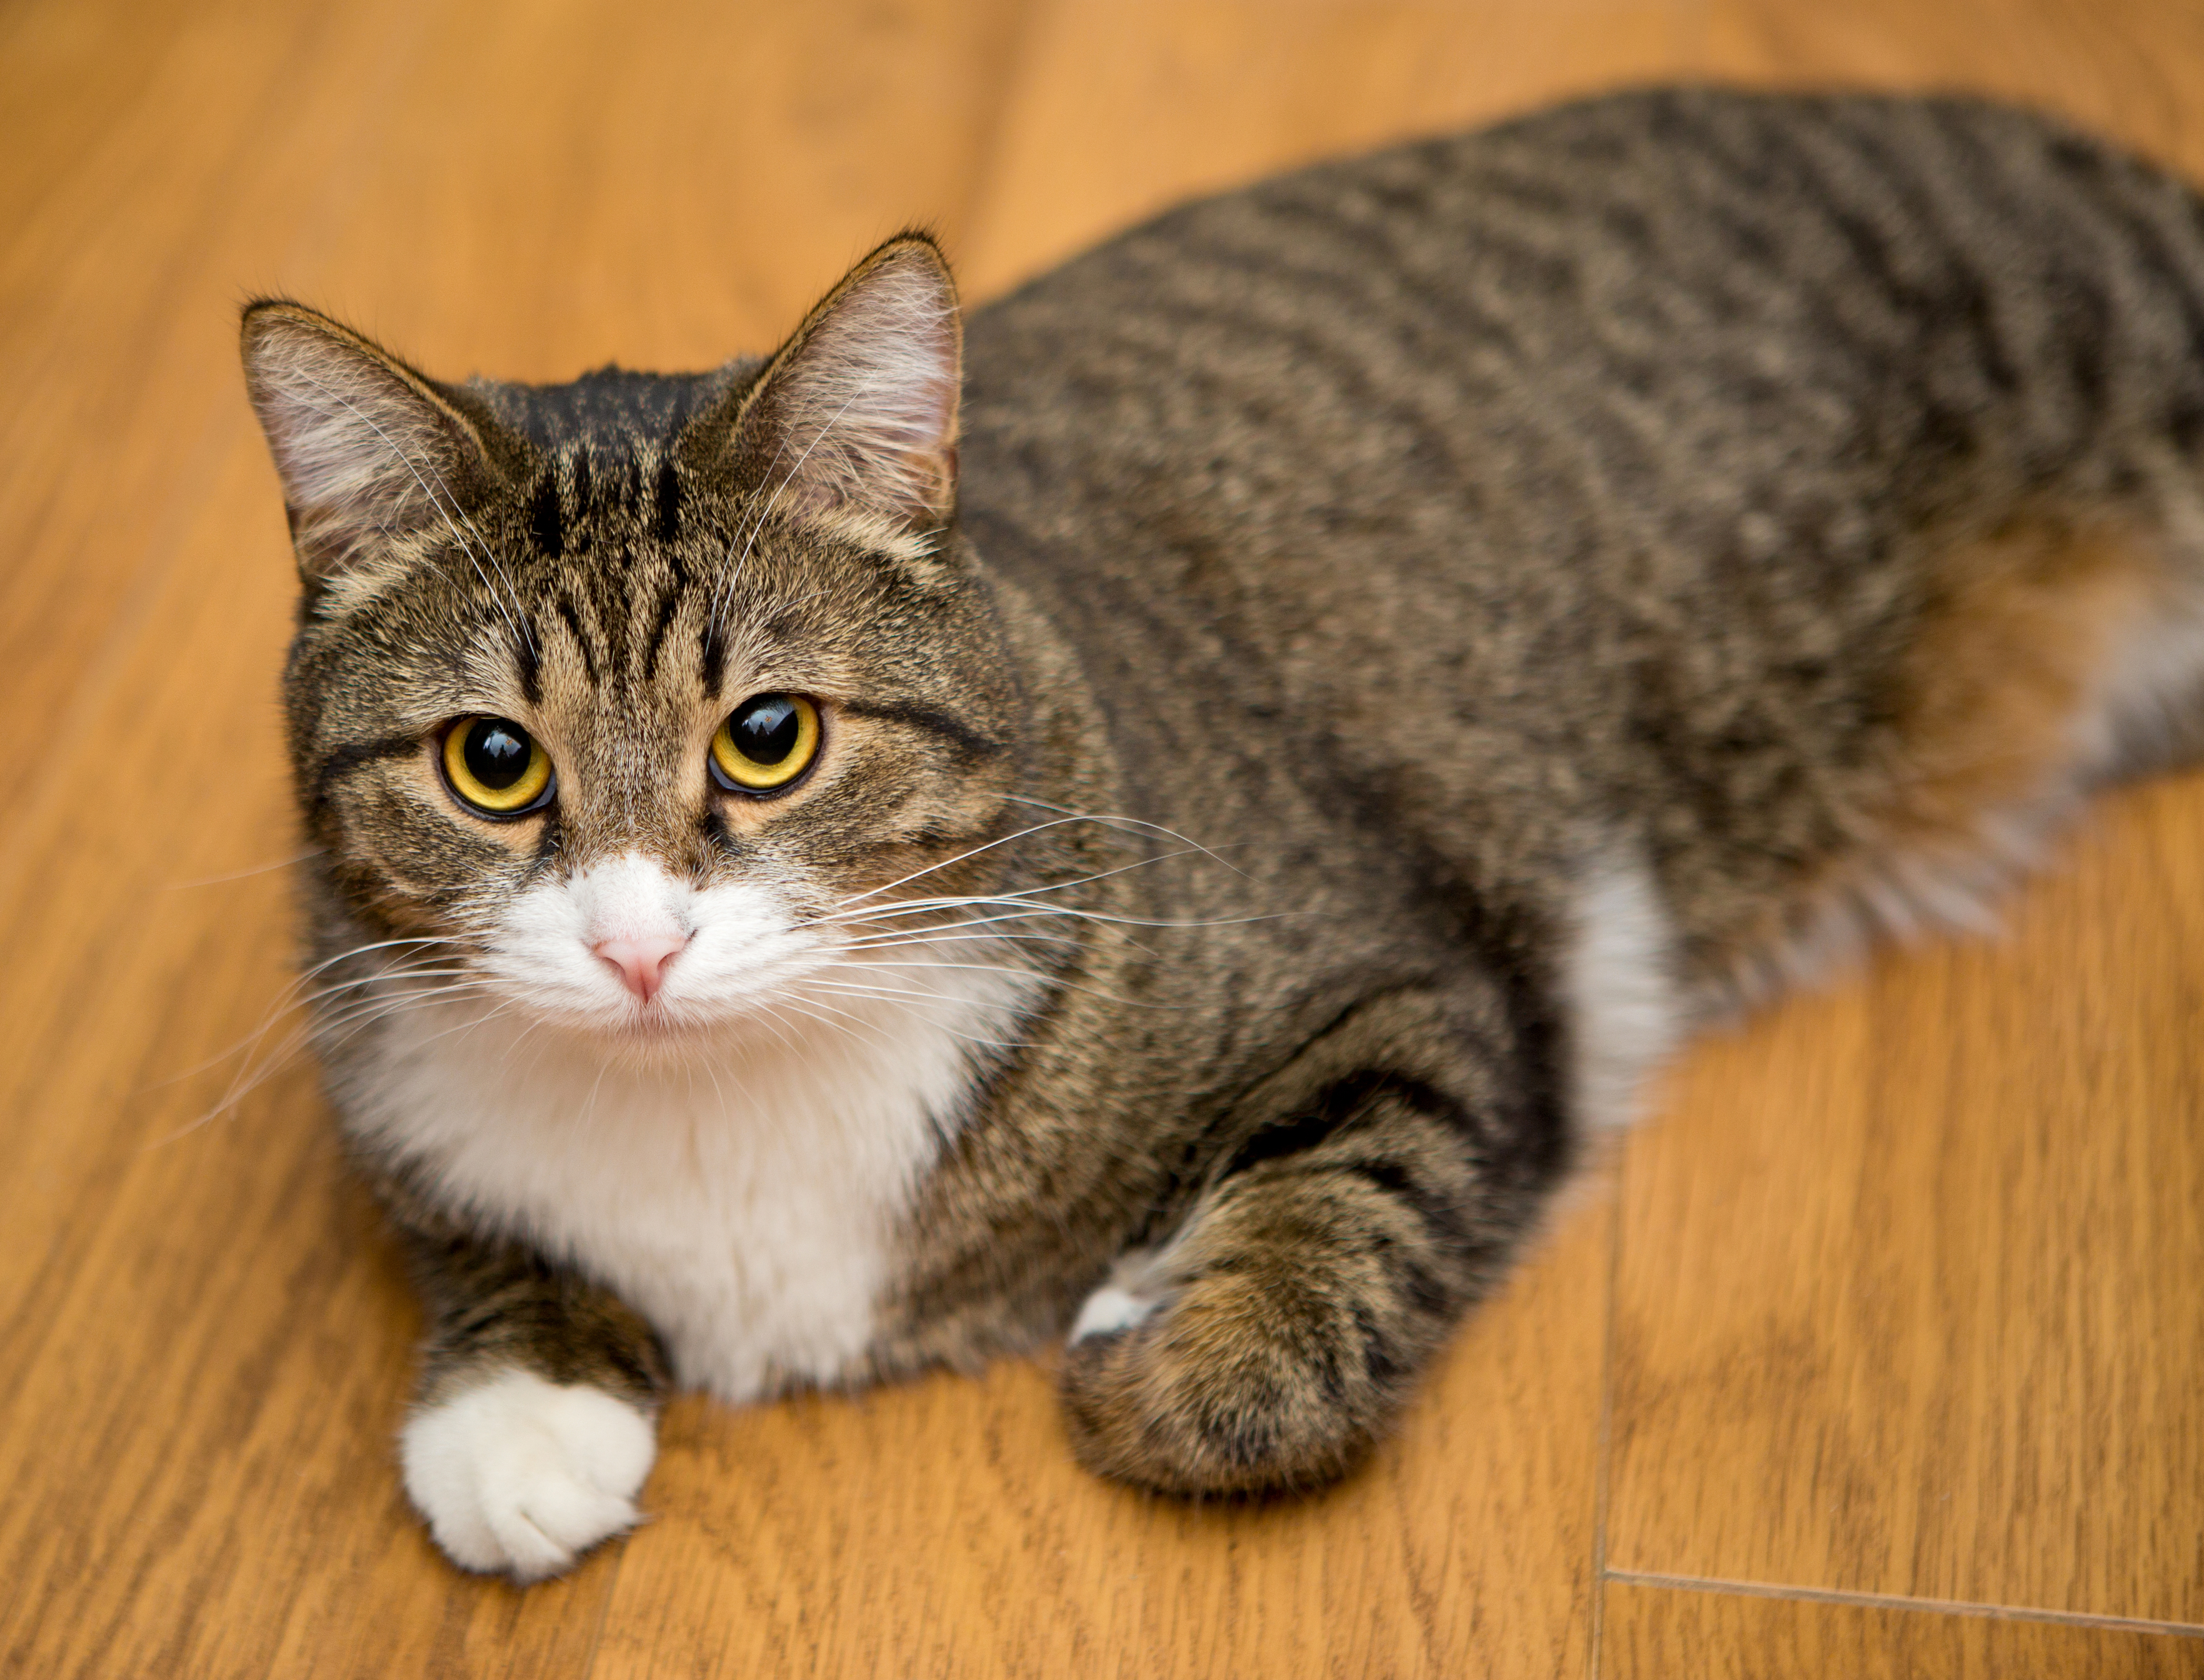 cat on wooden flooring